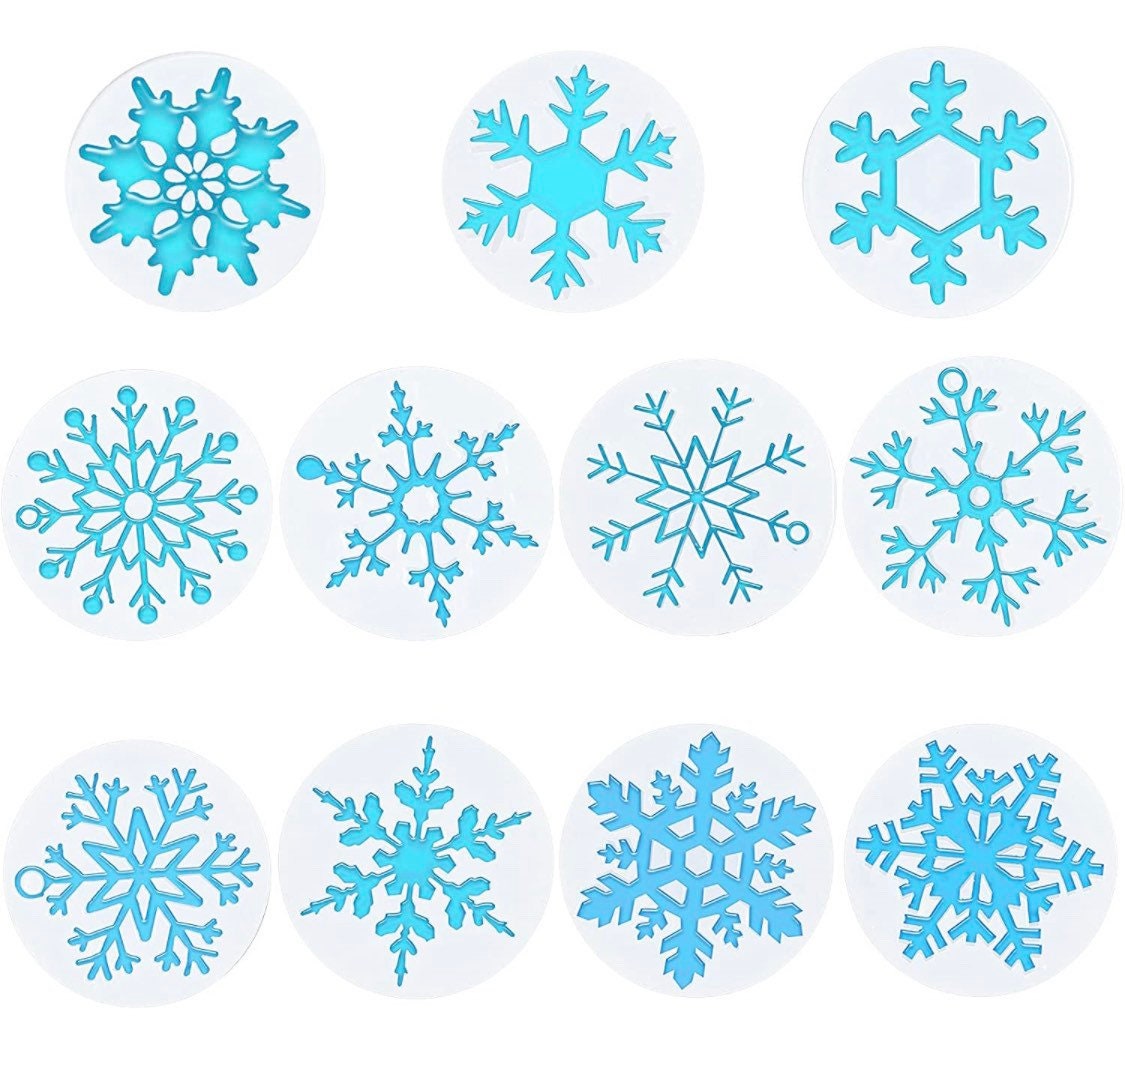 11pc Snowflake Mold - Winter resin molds - Christmas silicone mold